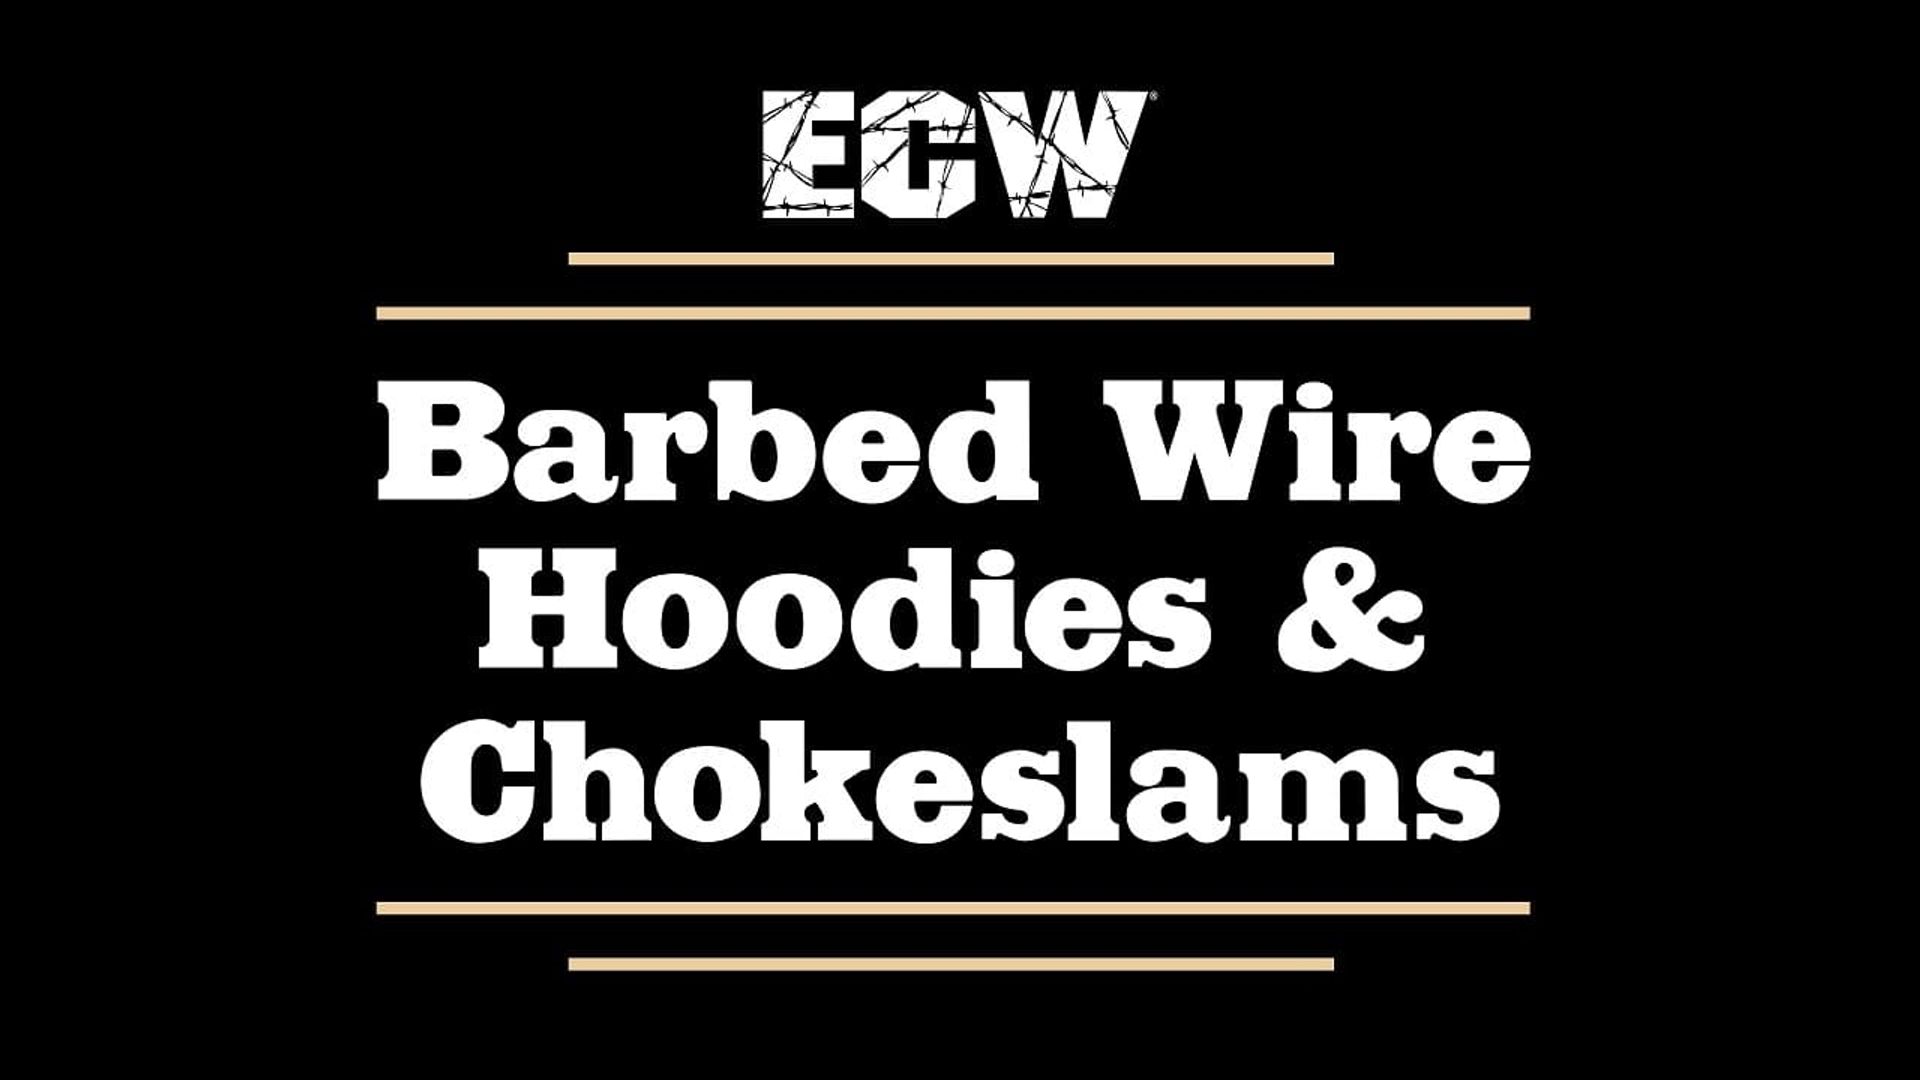 ECW Barbed Wire, Hoodies & Chokeslams background